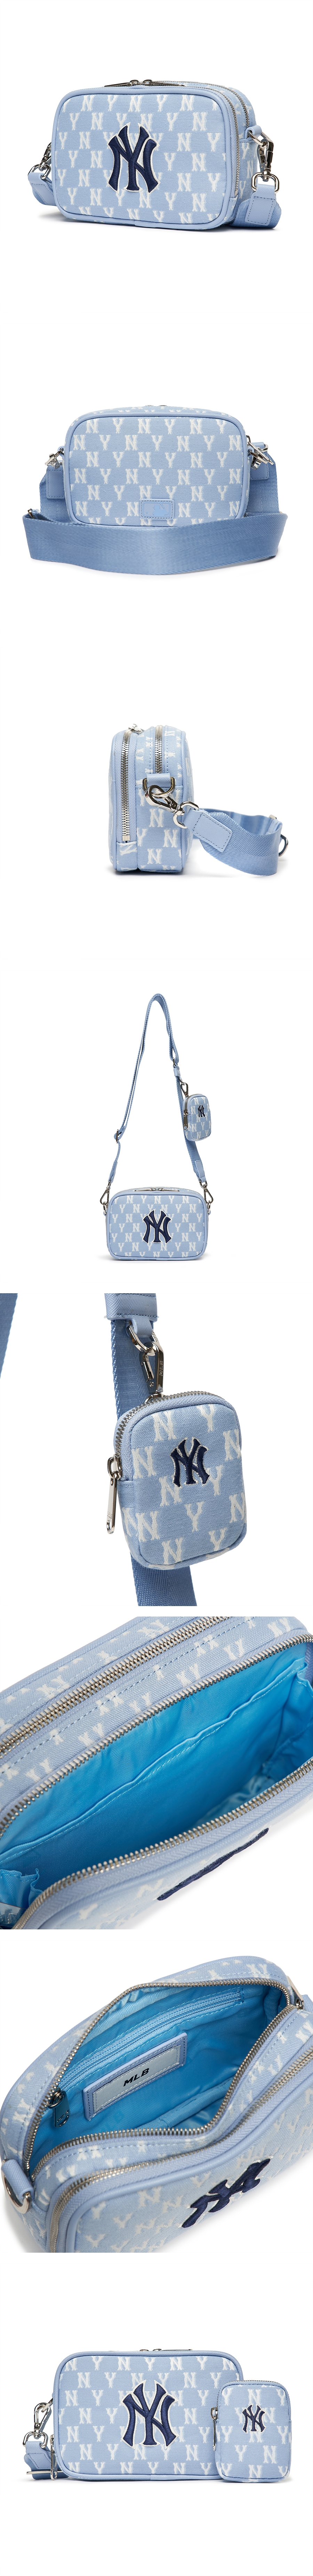 MLB Korea Monogram Mini Cross Bag